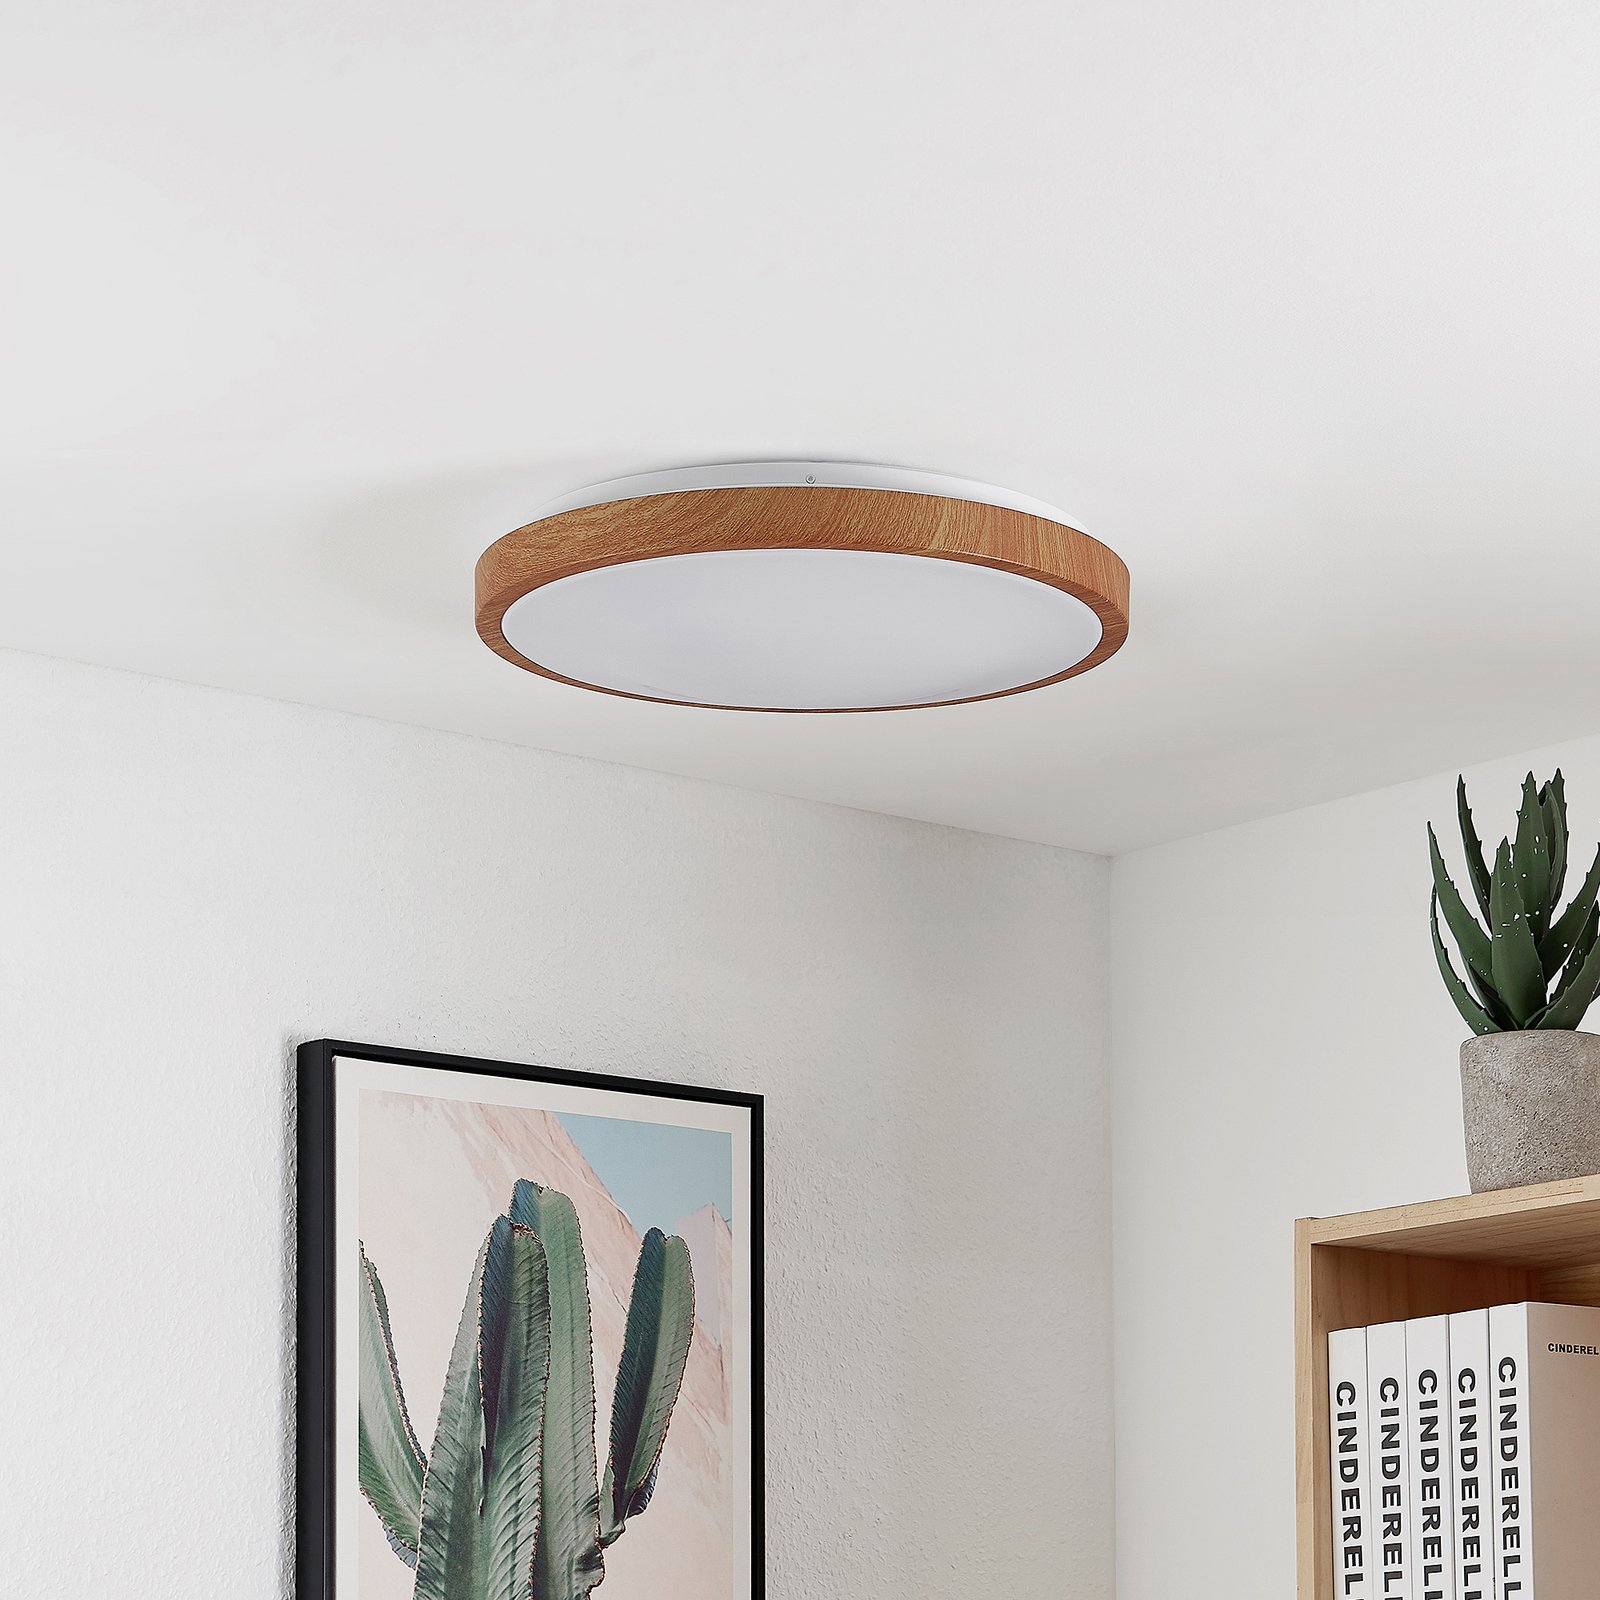 Lindby Mynte LED ceiling light, round, 42.5 cm